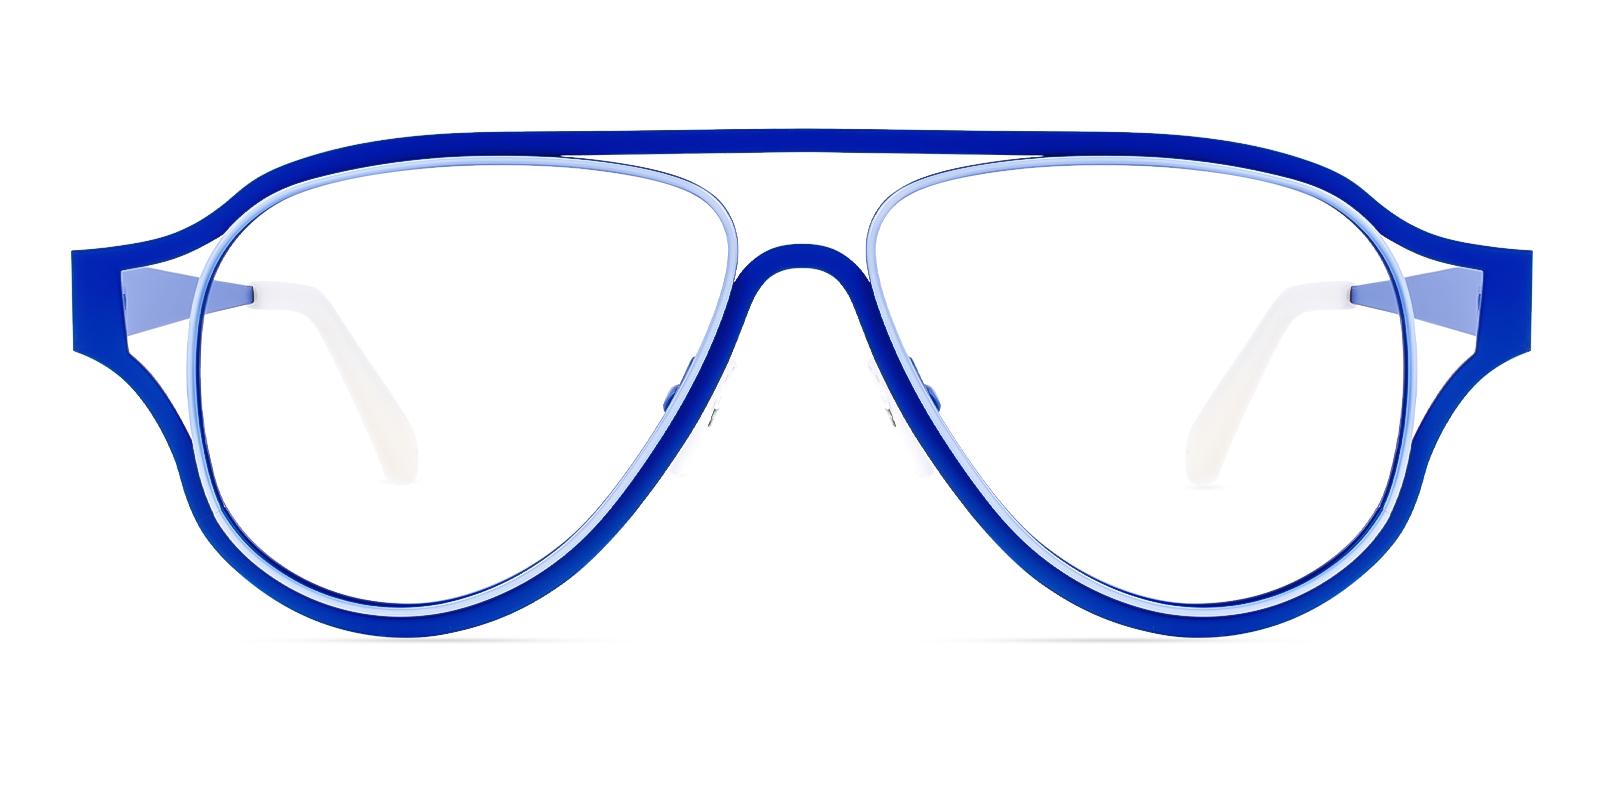 Presentile Blue Metal Eyeglasses , NosePads Frames from ABBE Glasses